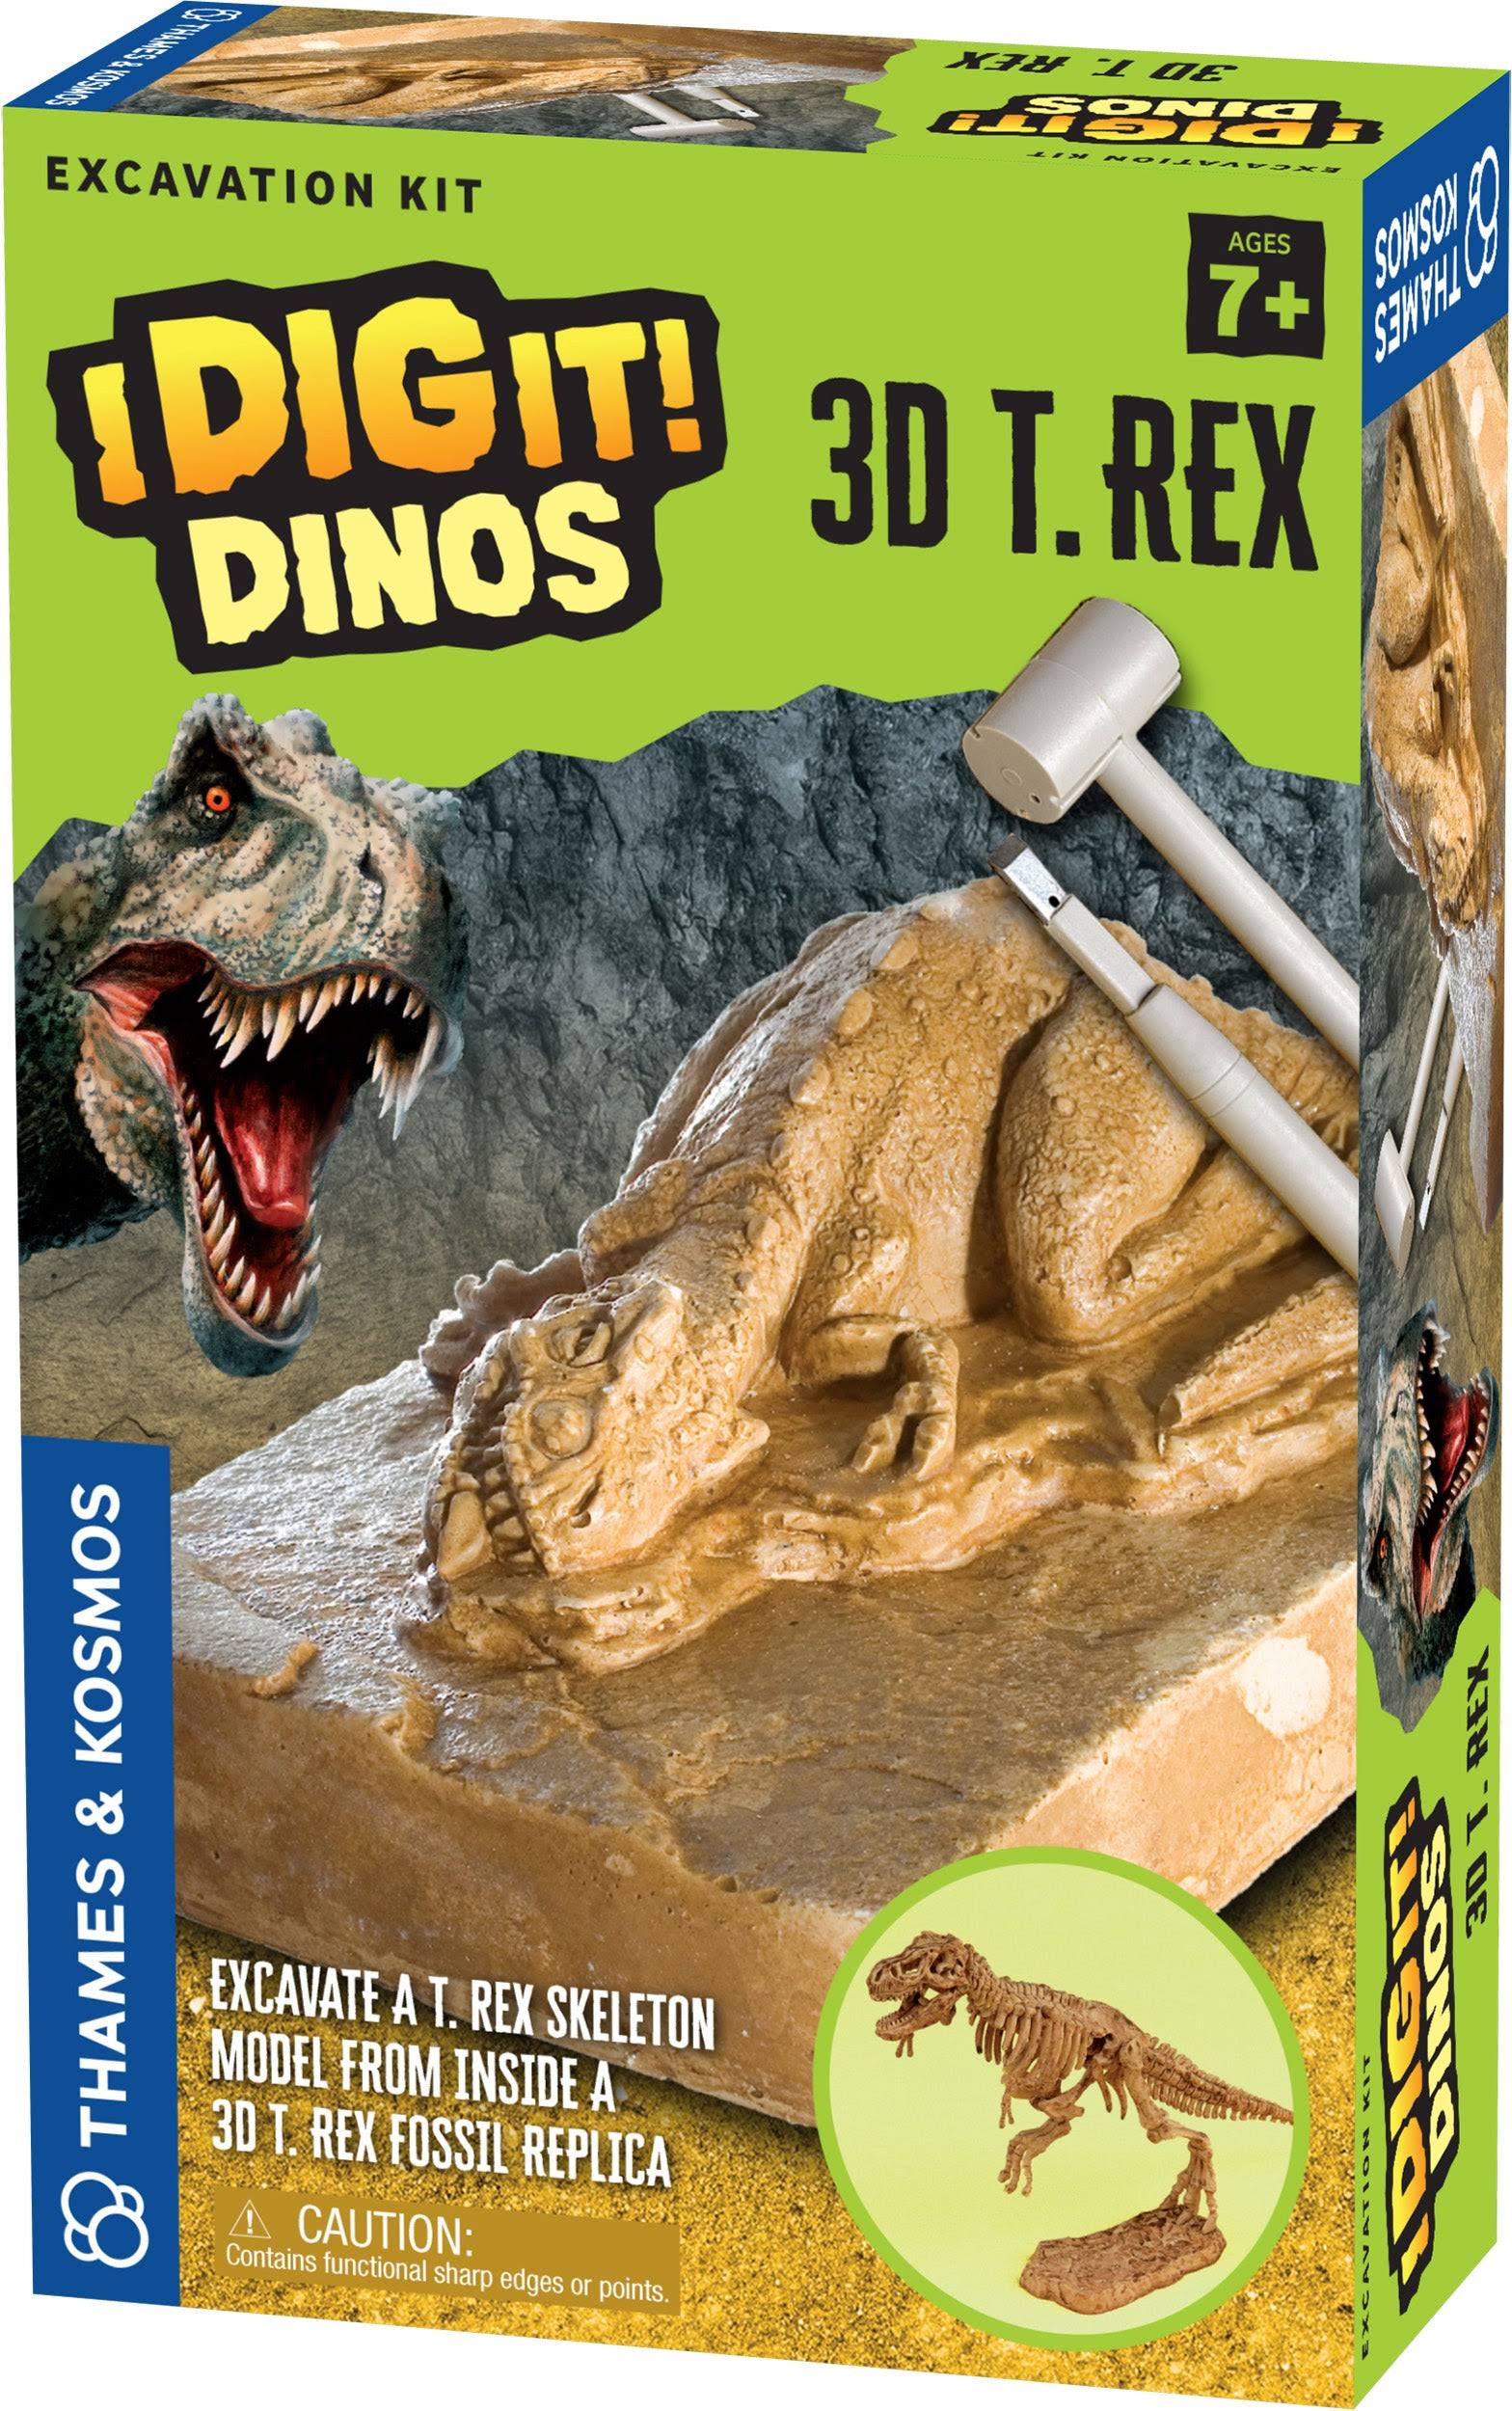 Thames & Kosmos 657550 I Dig It! Dinos 3D T. Rex Excavation | Science